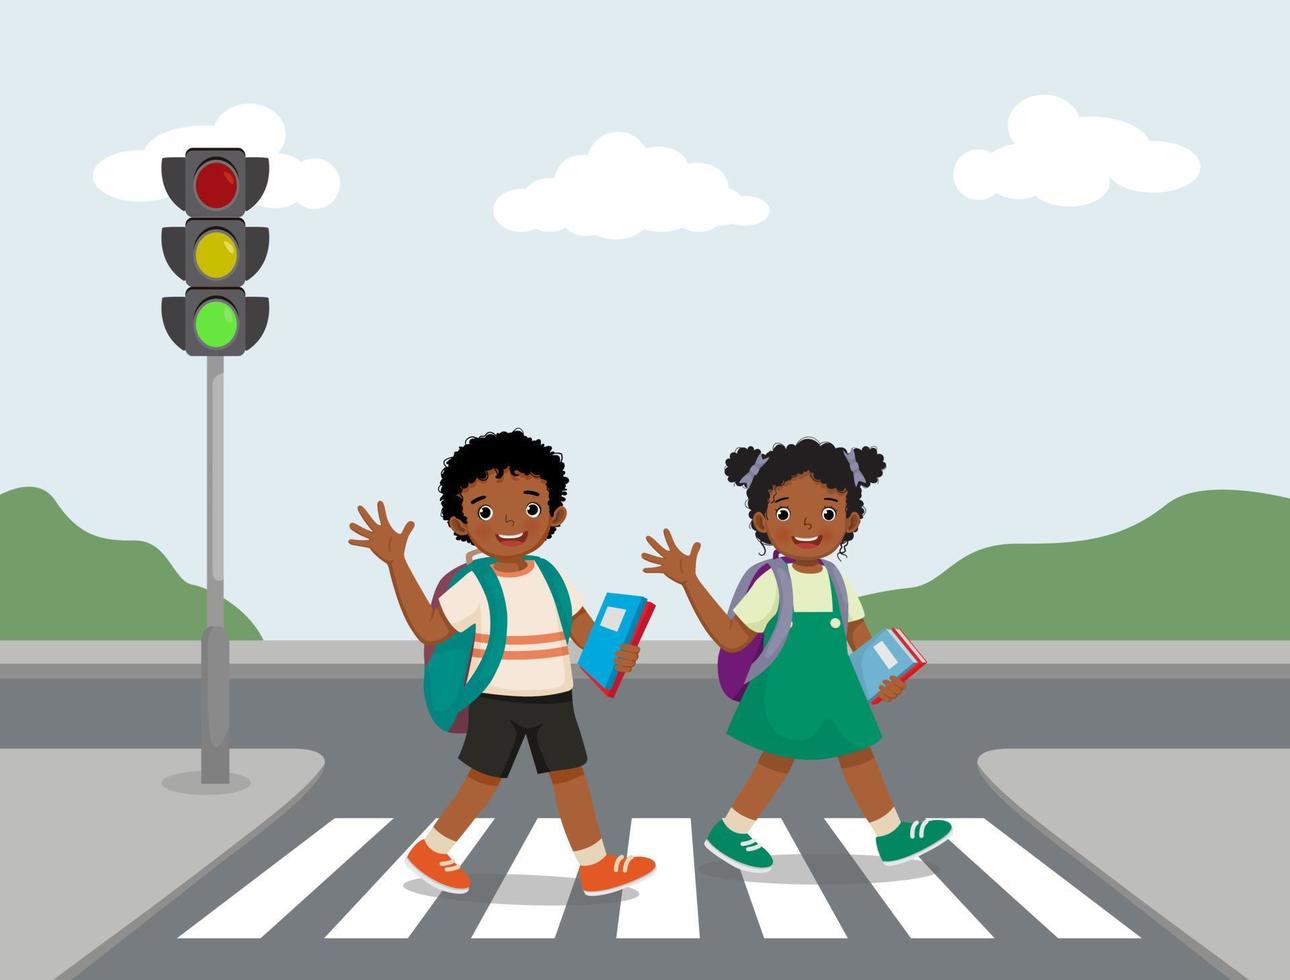 Cute African school kids with backpack waving hands walking crossing road near traffic light on zebra crossing on the way to school vector